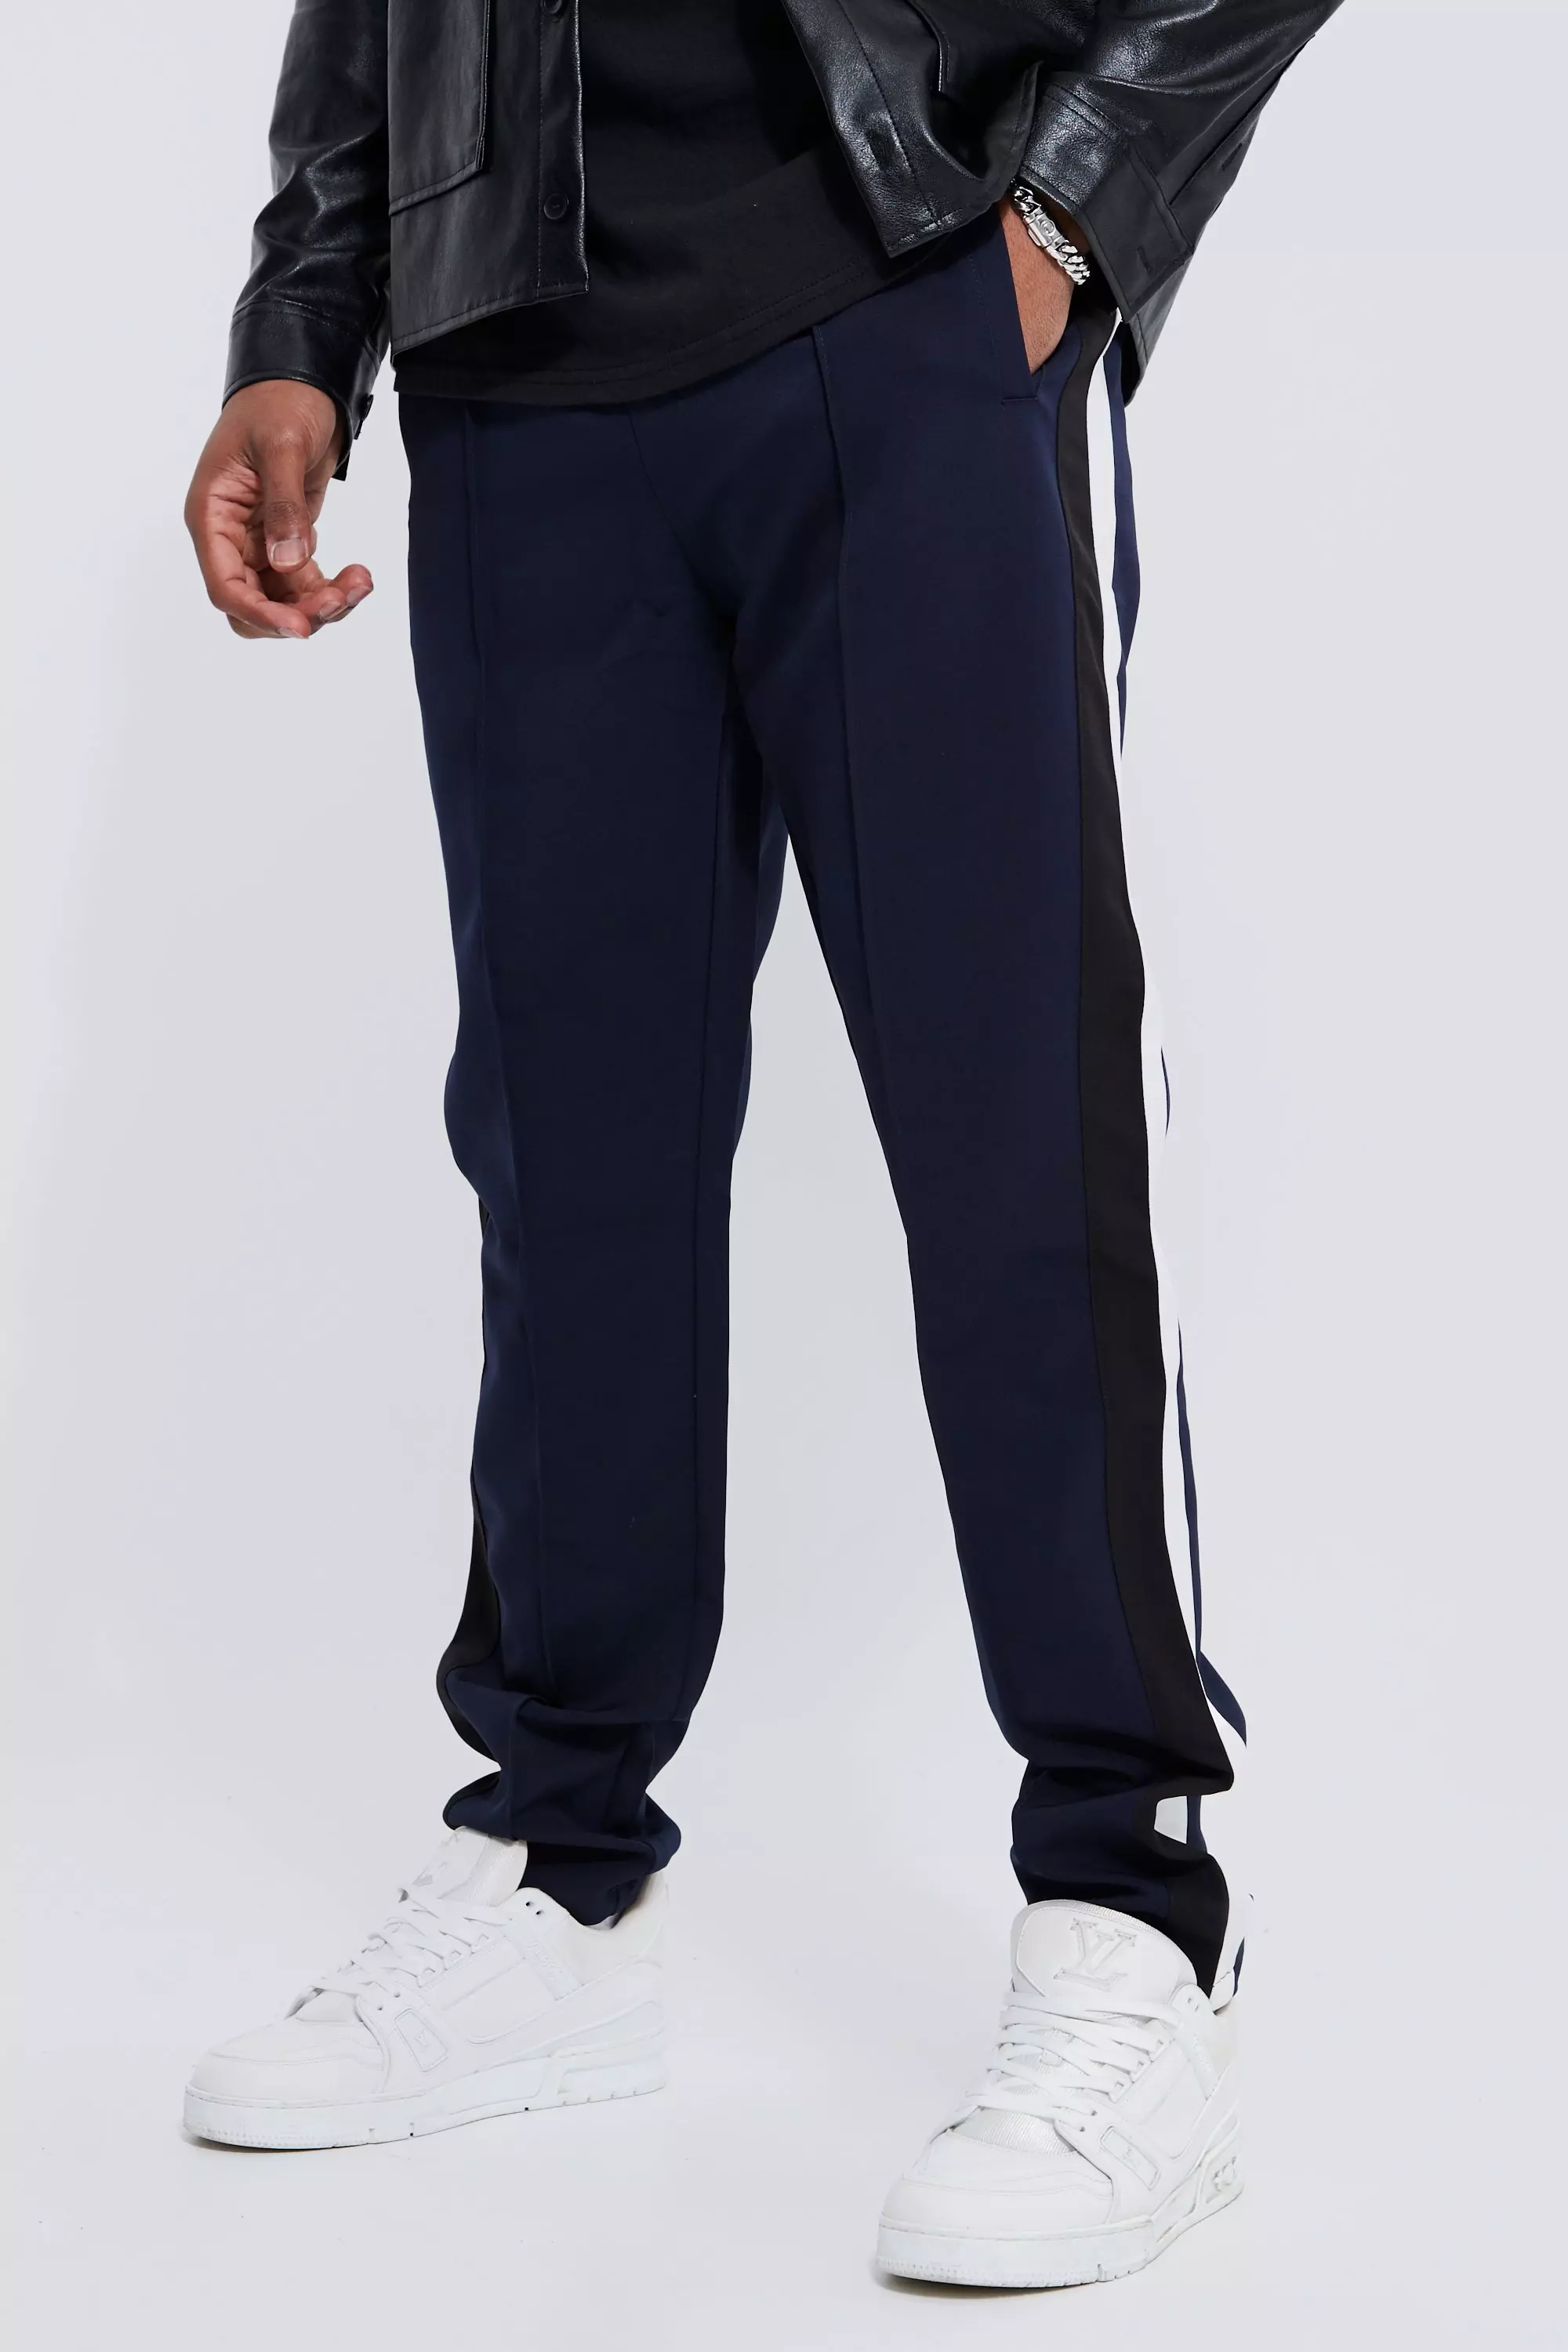 Navy Tall Tailored Varsity Pants